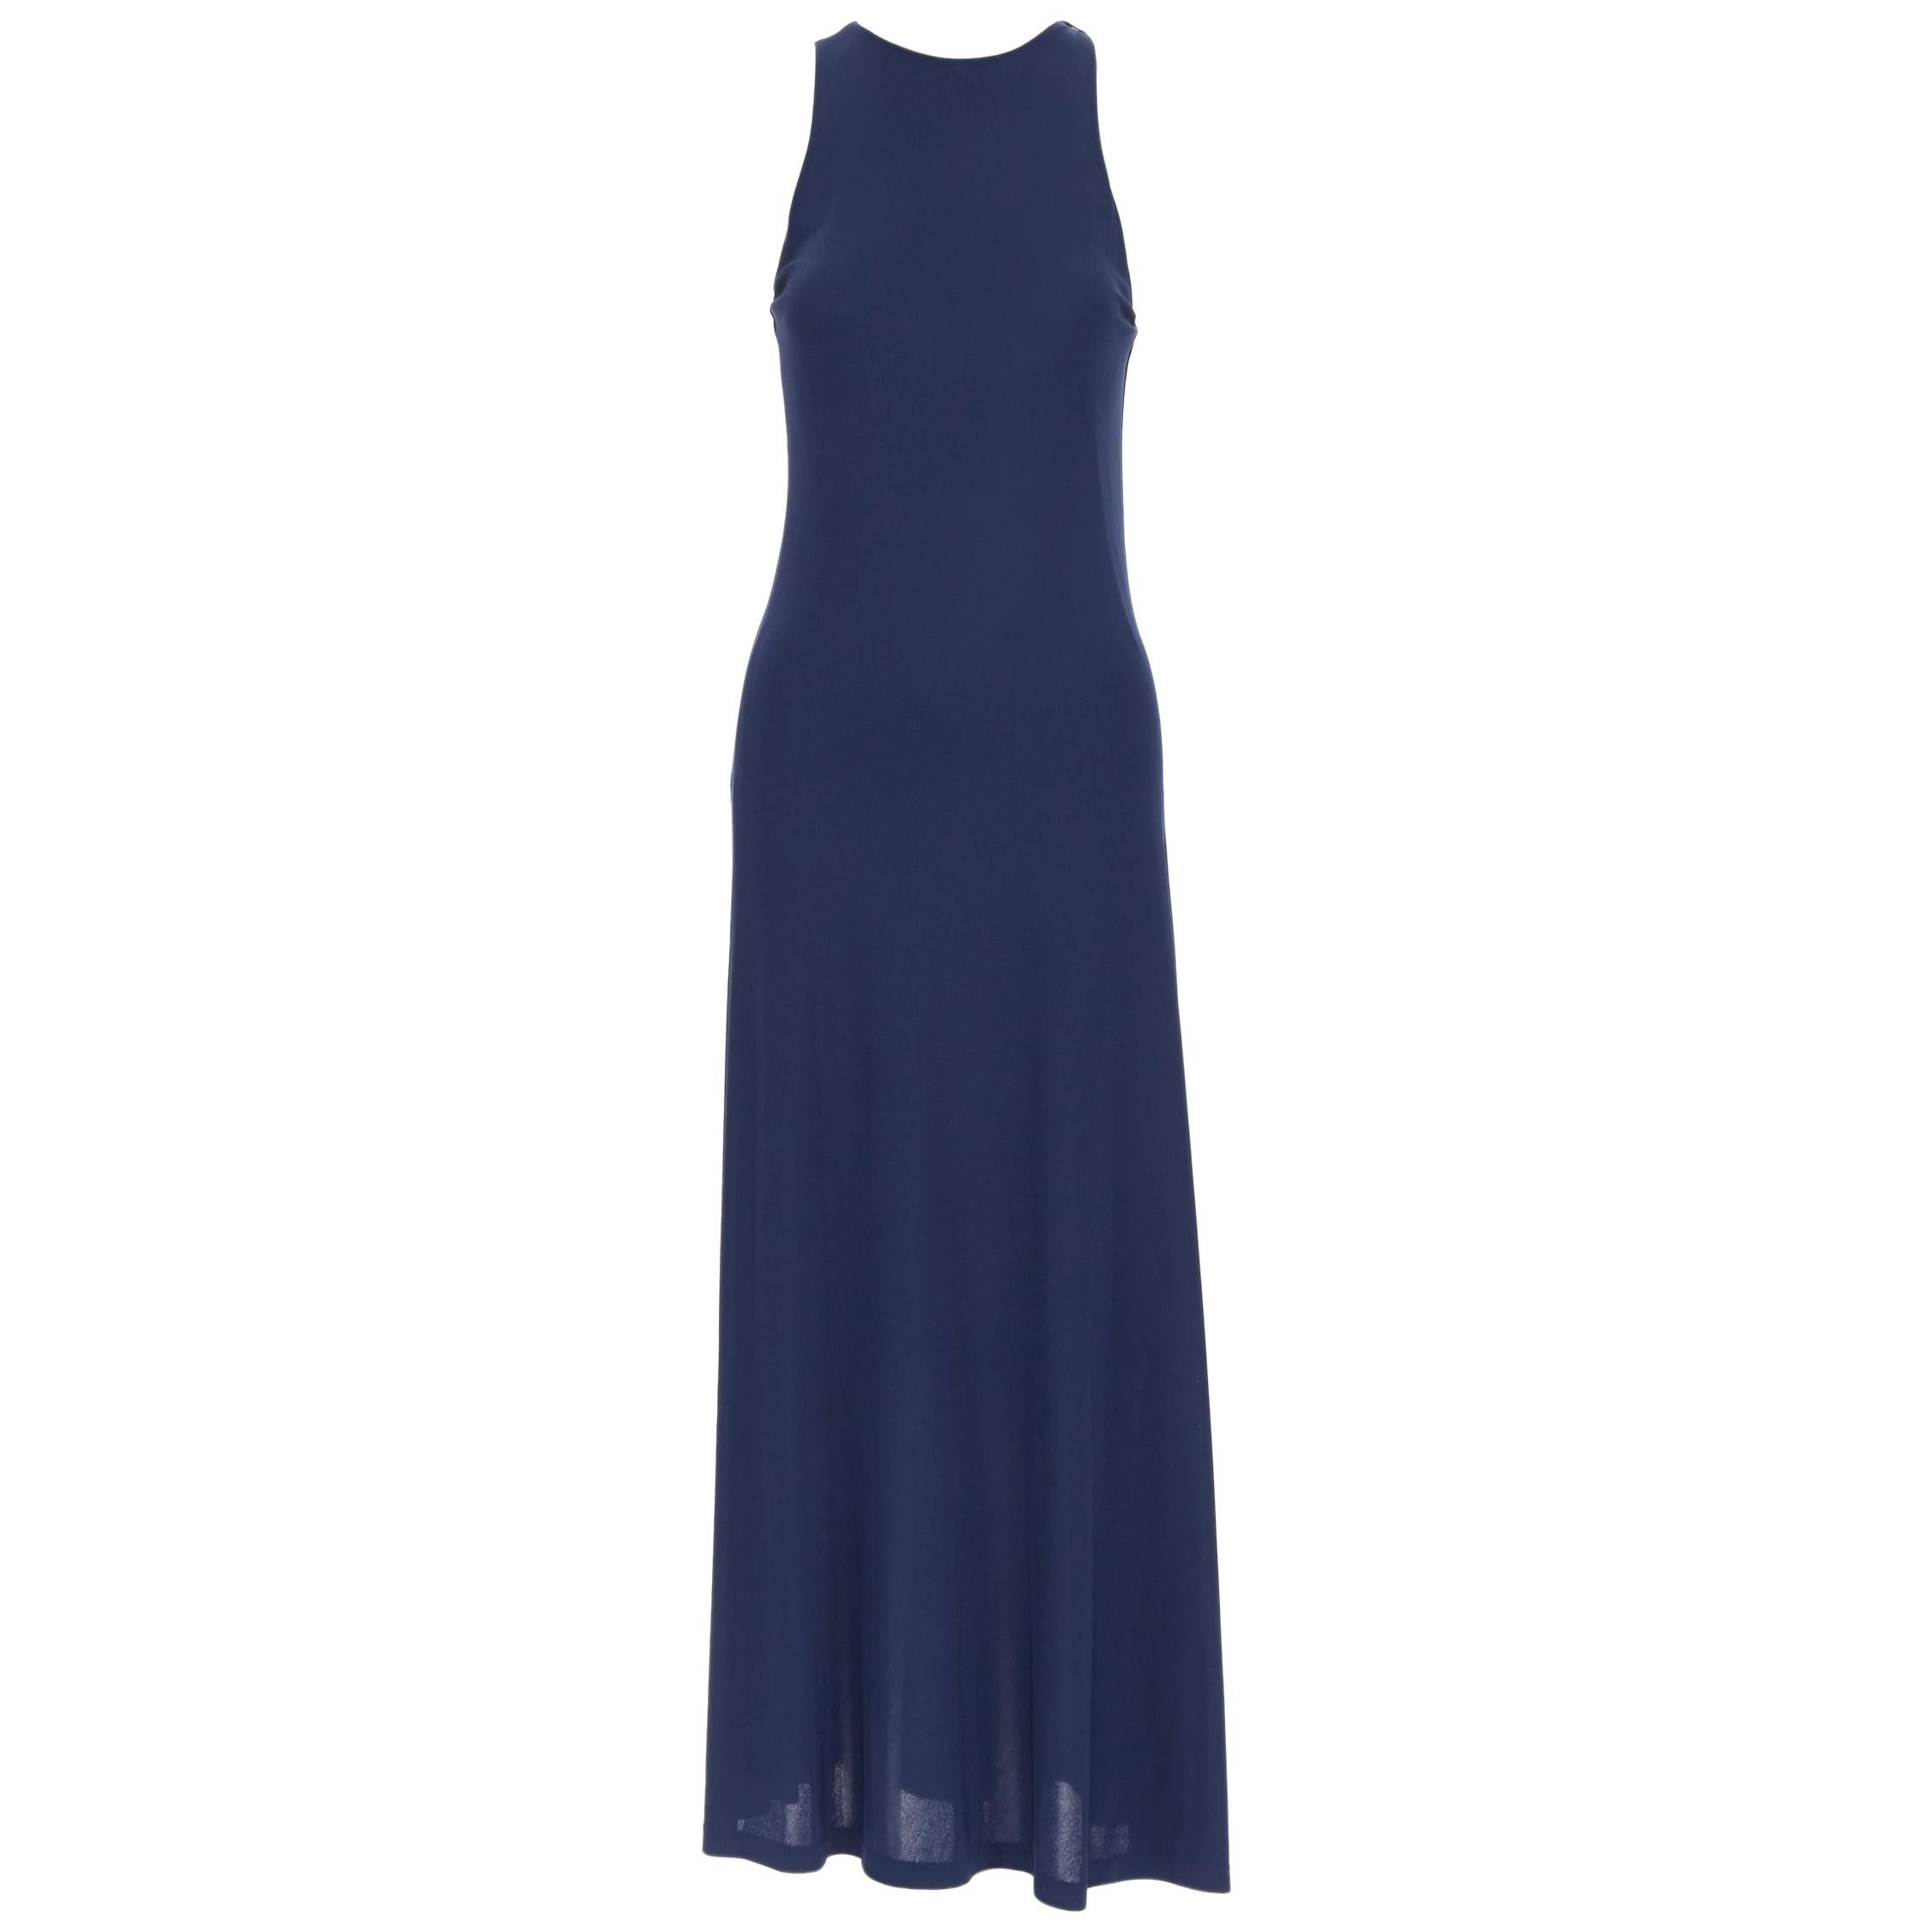 POLO RALPH LAUREN navy blue viscose polyester sleeveless casual maxi dress XS